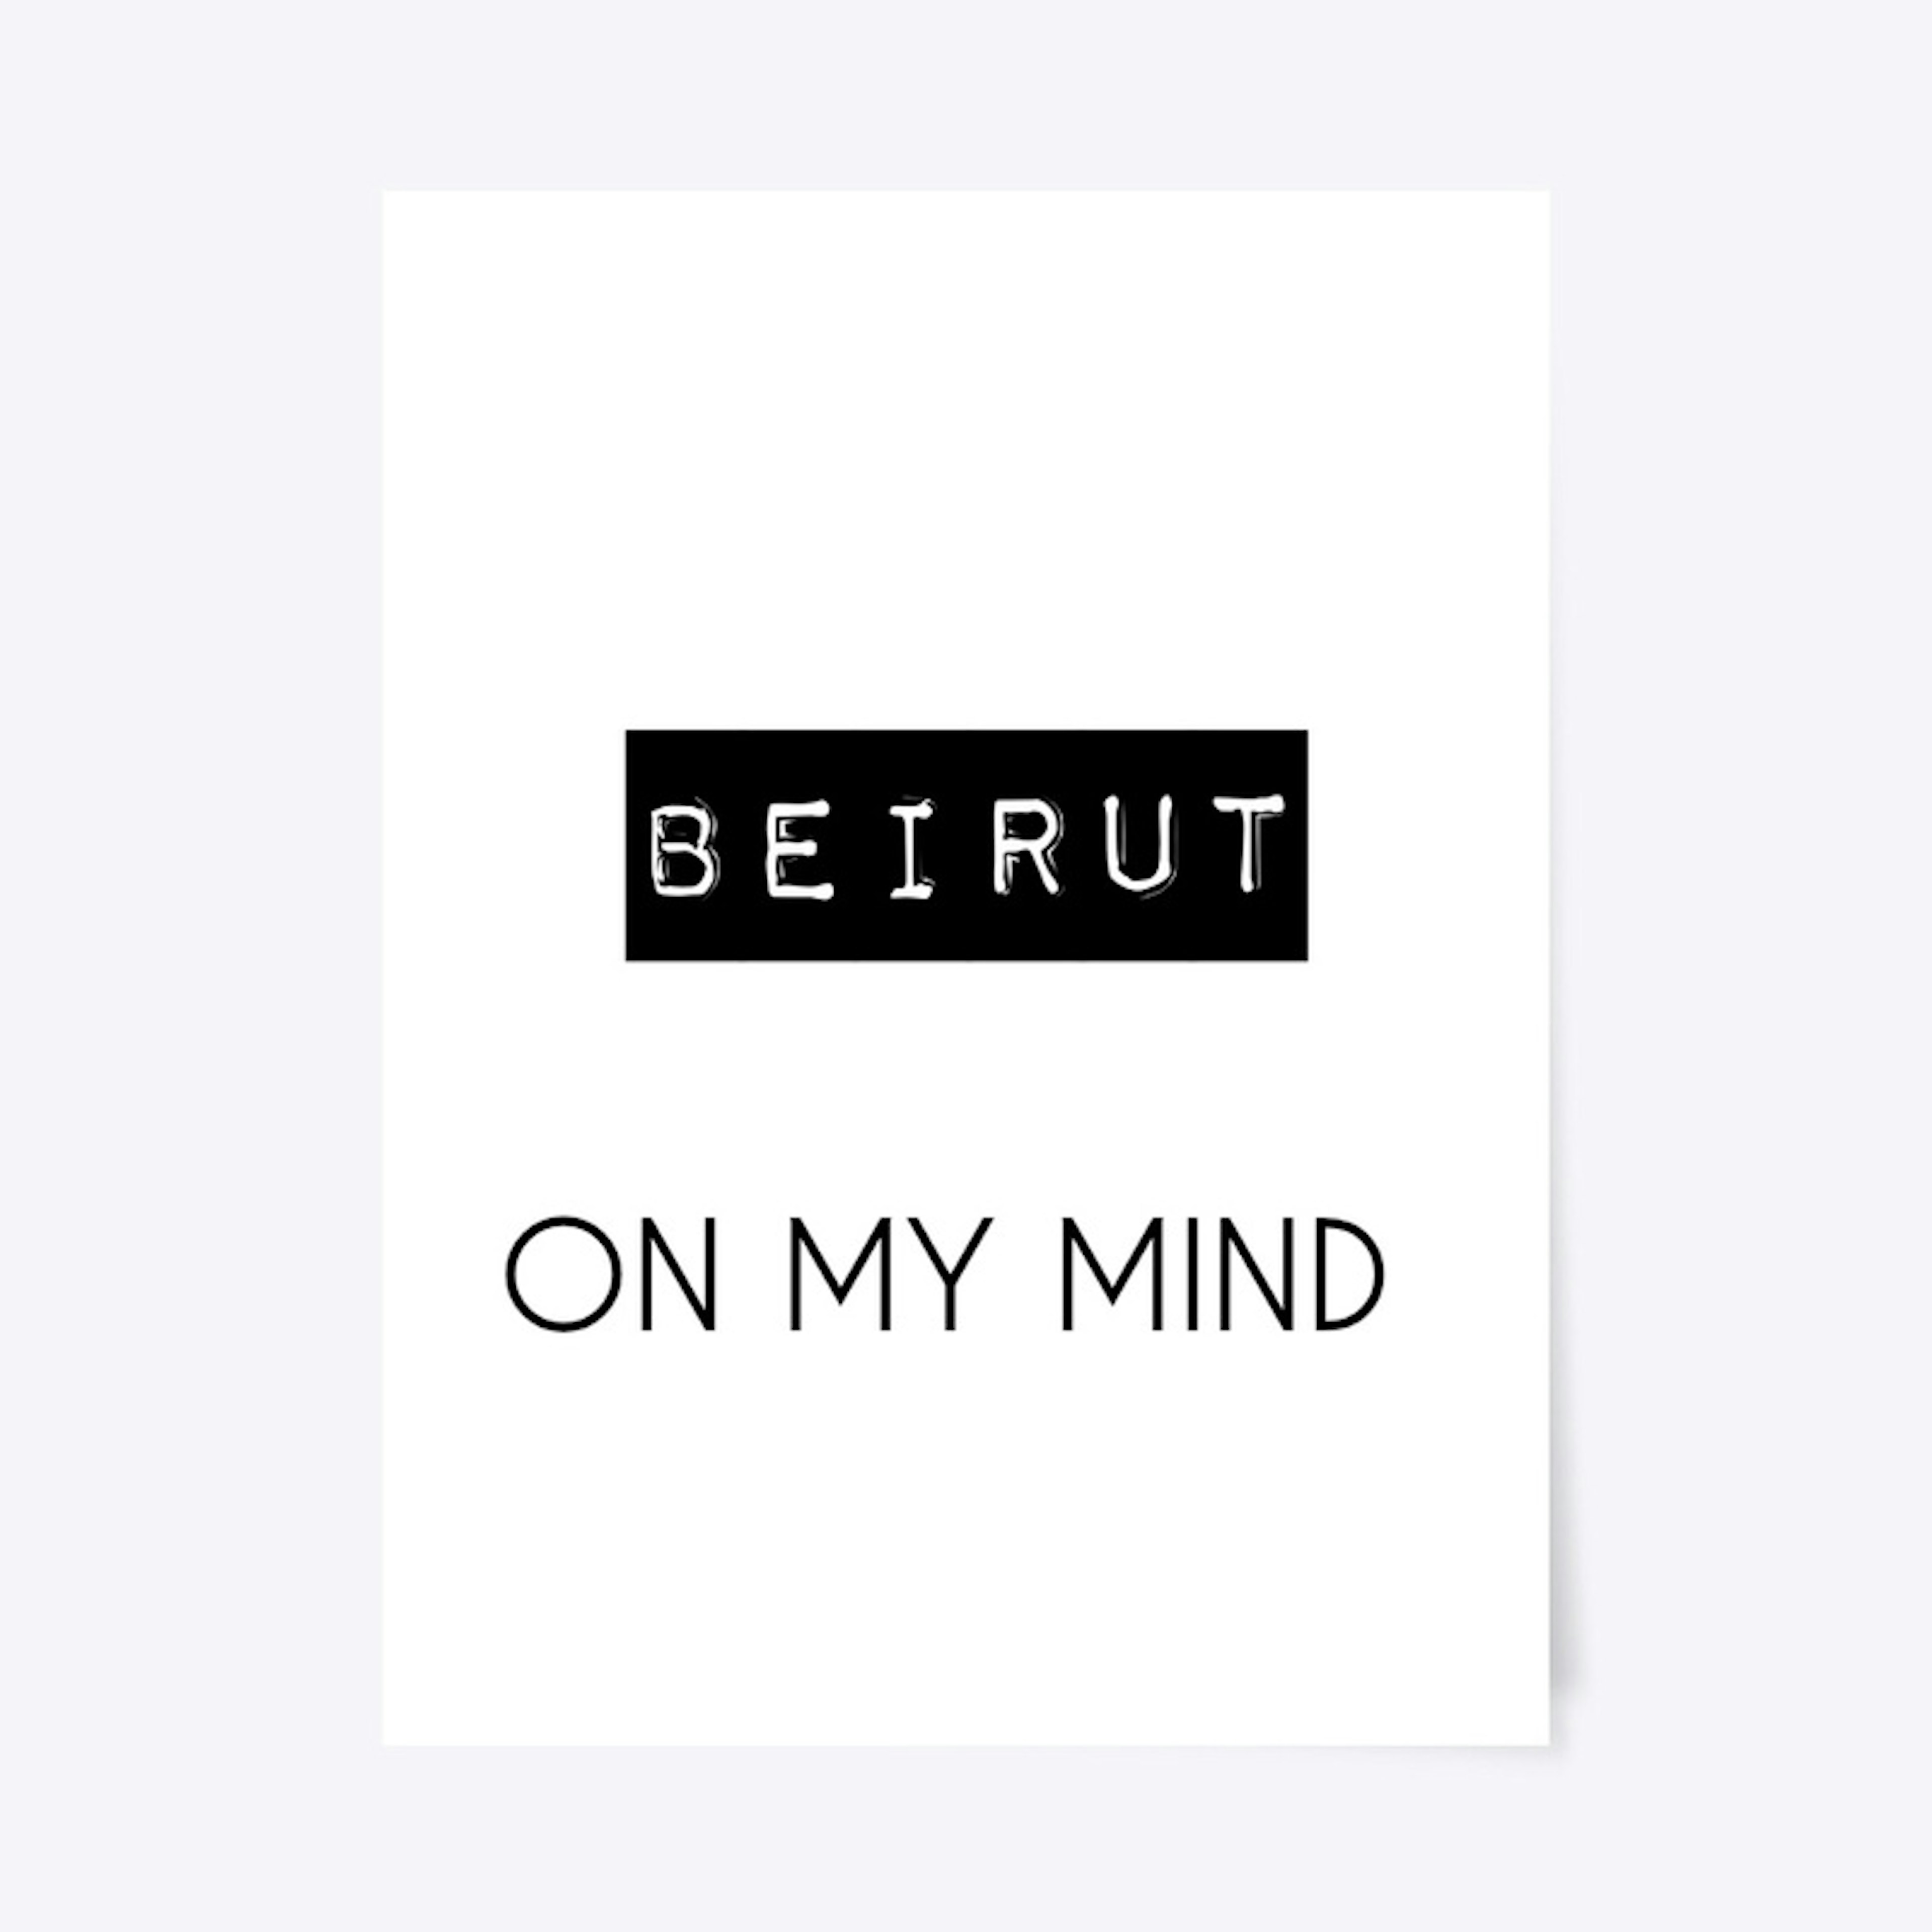 BEIRUT ON MY MIND